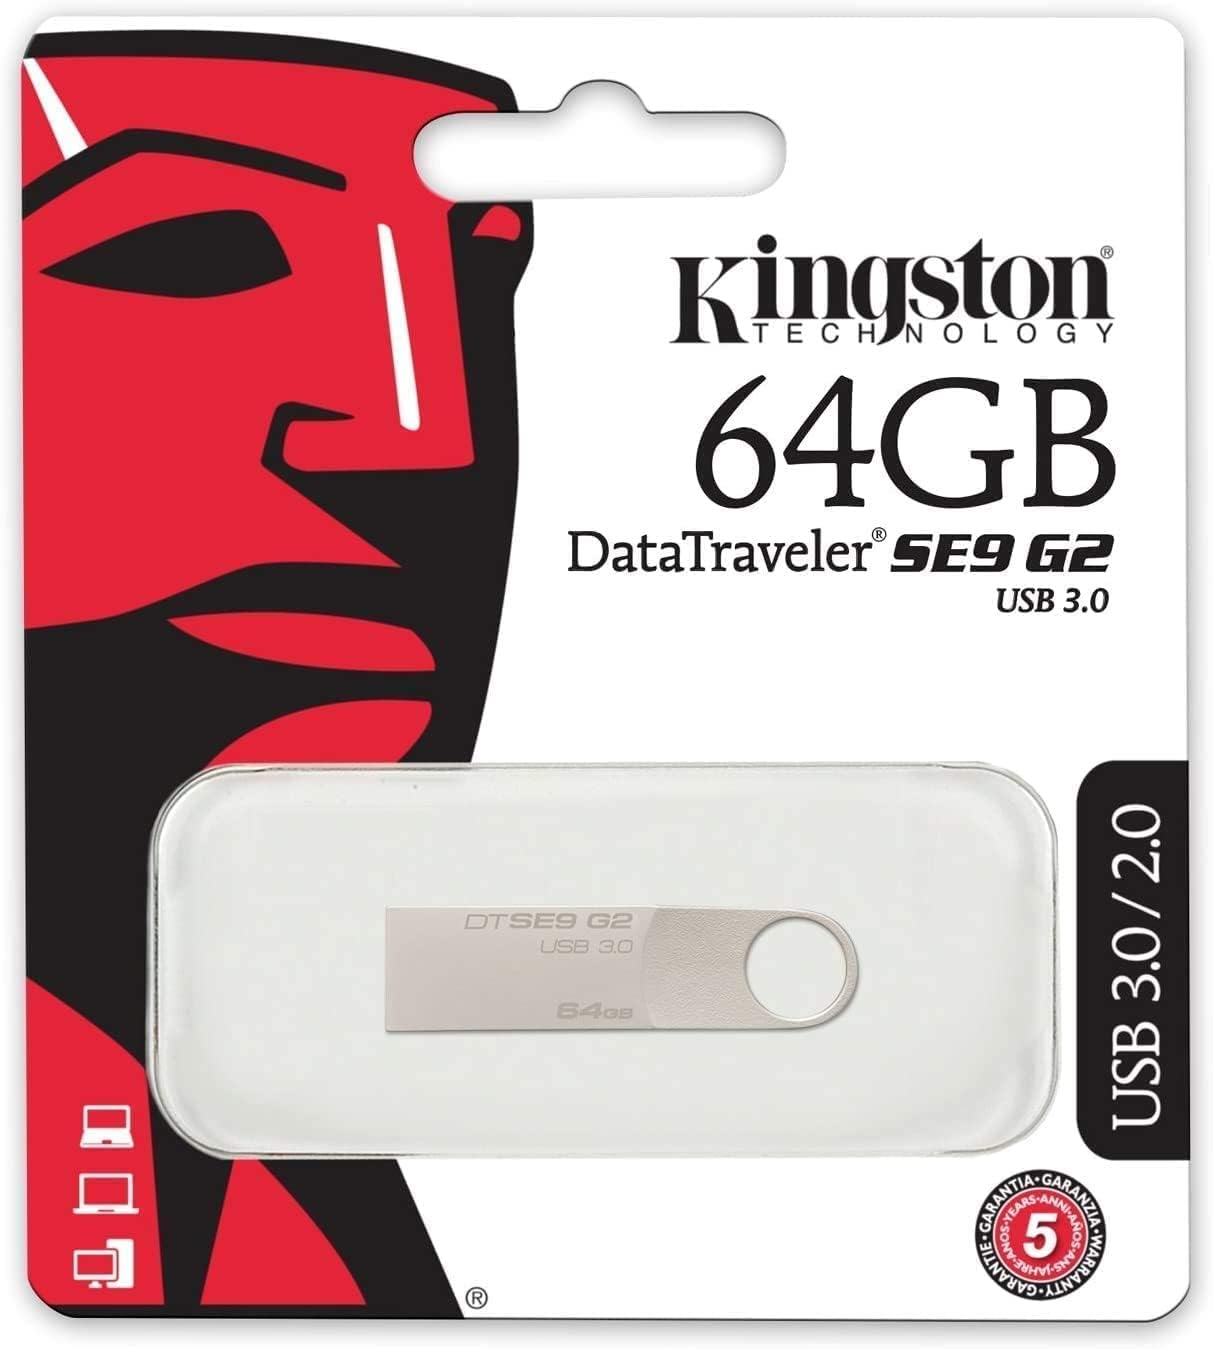 Kingston 64GB DataTraveler SE9 G2 USB 3.0 Flash Drive